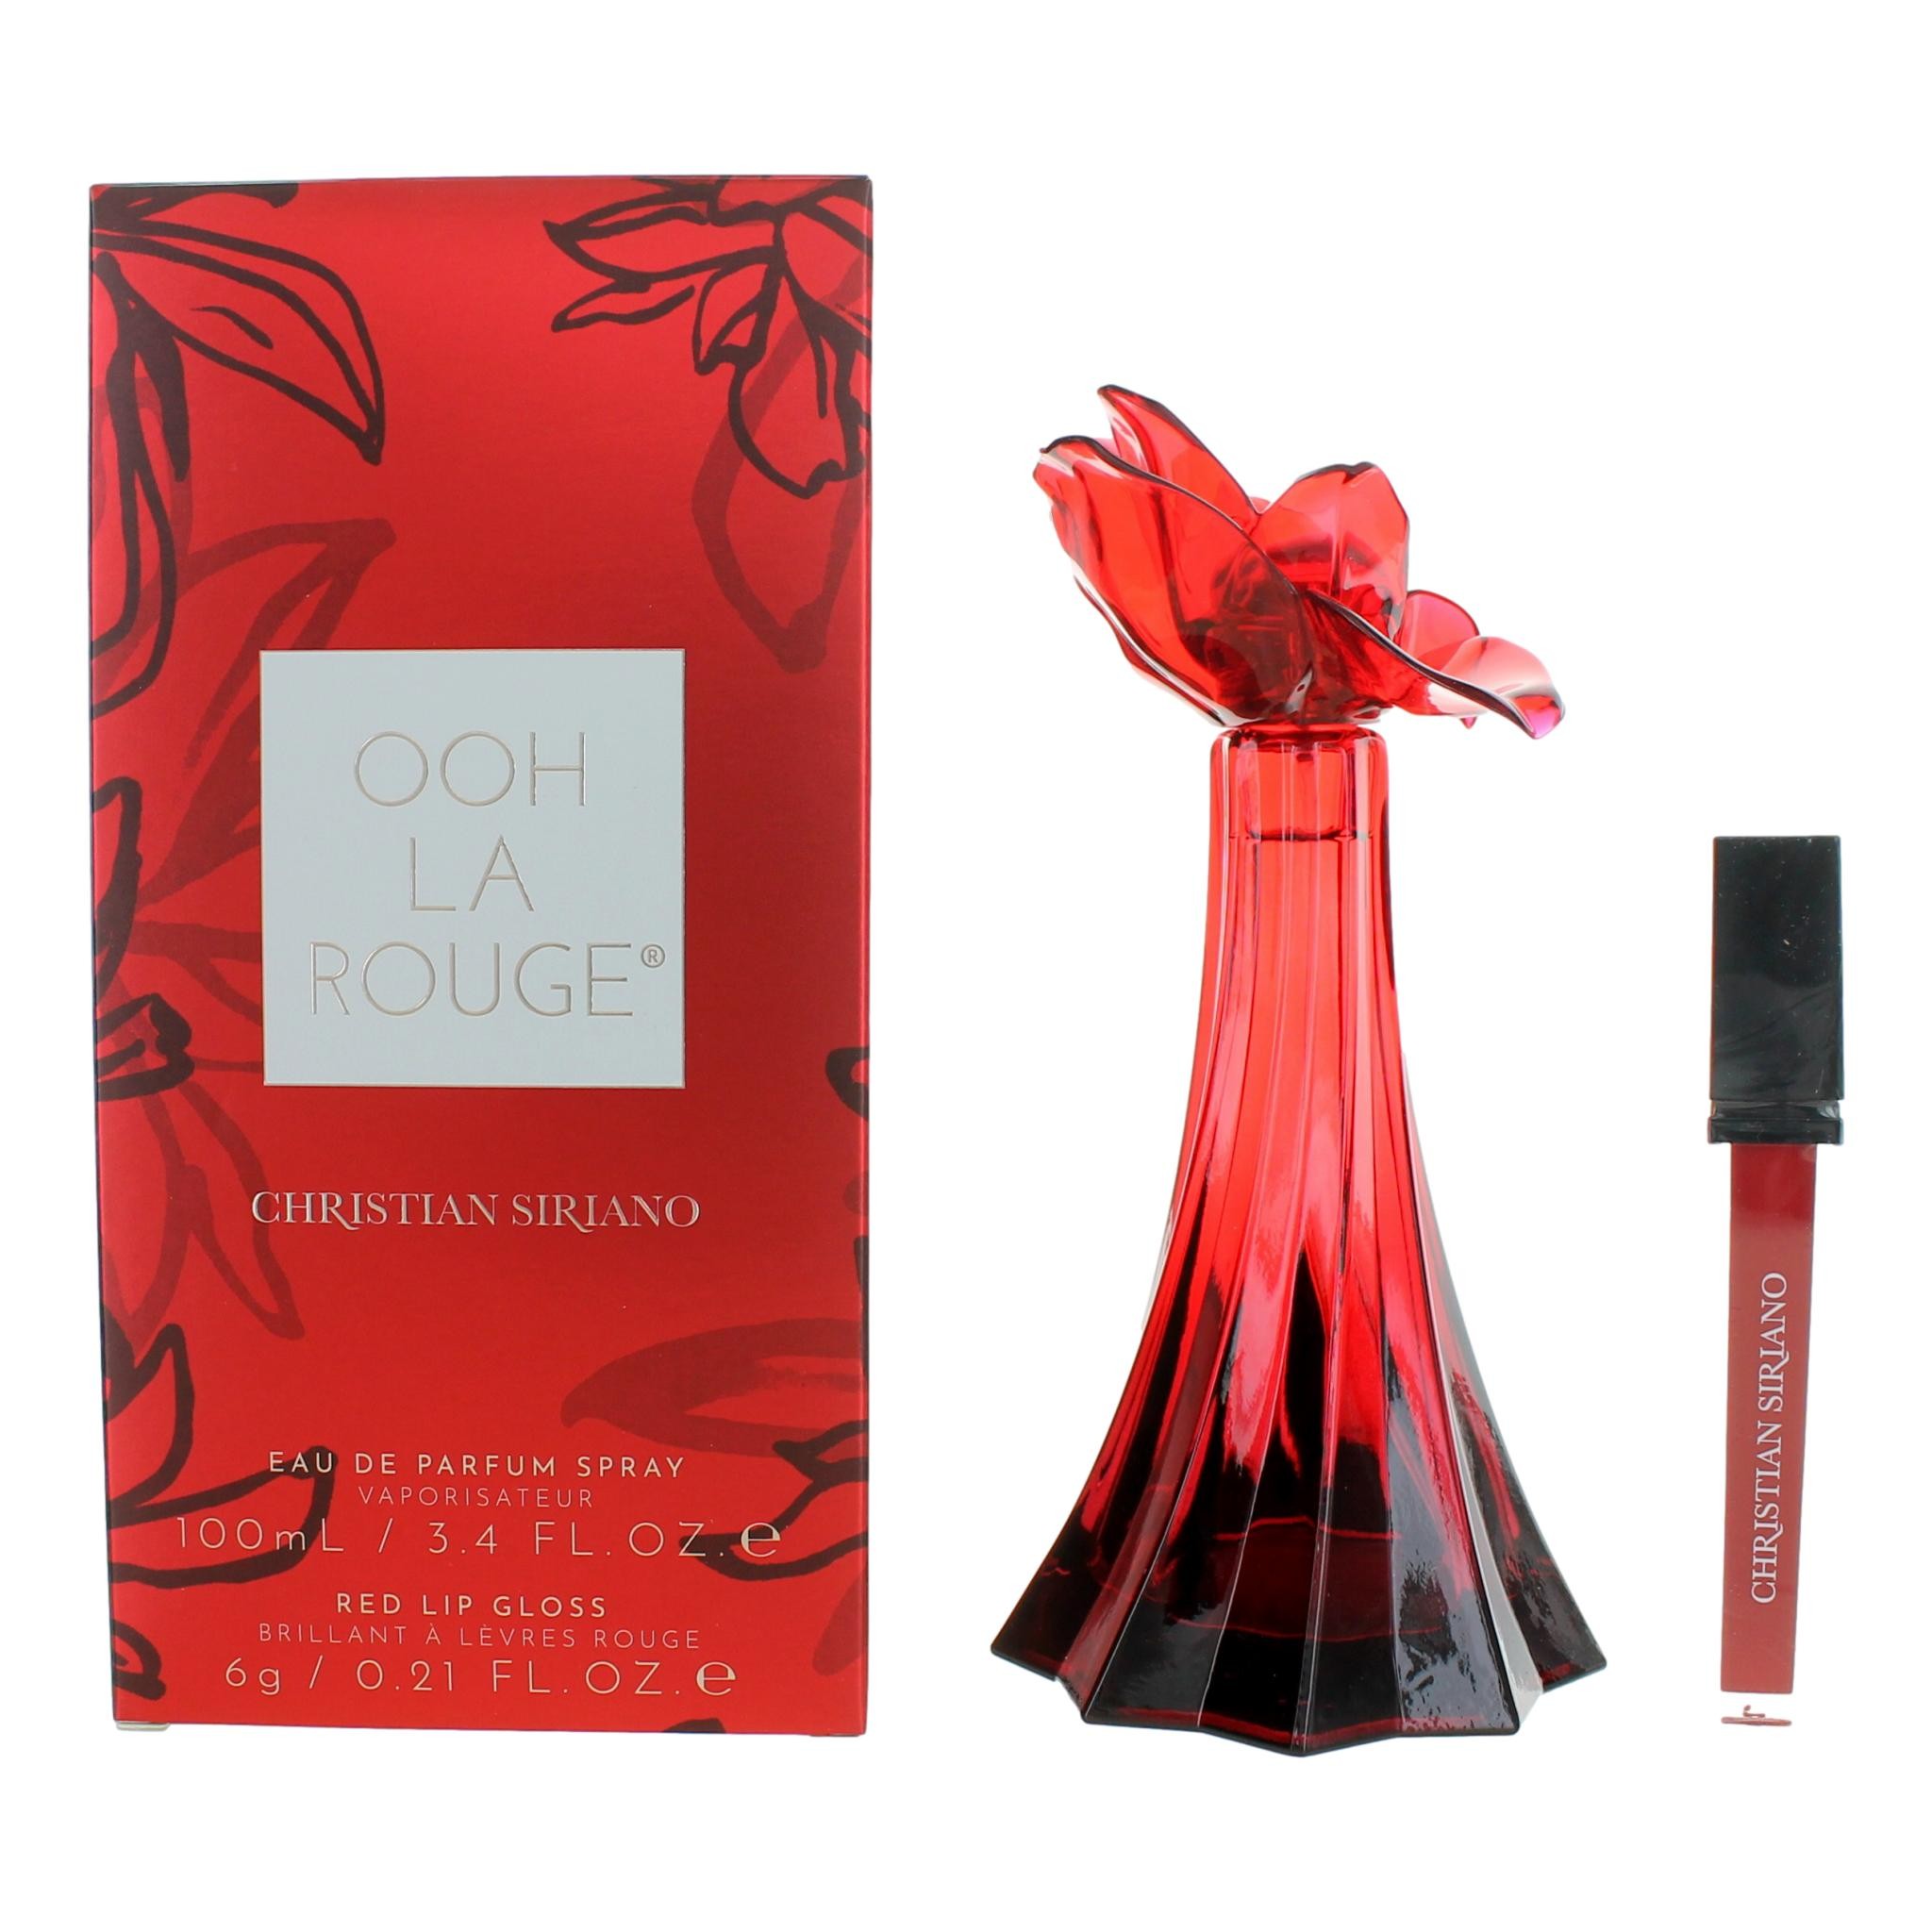 Ooh La Rouge by Christian Siriano 3.4 oz Eau De Parfum Spray for Women with Lip Gloss